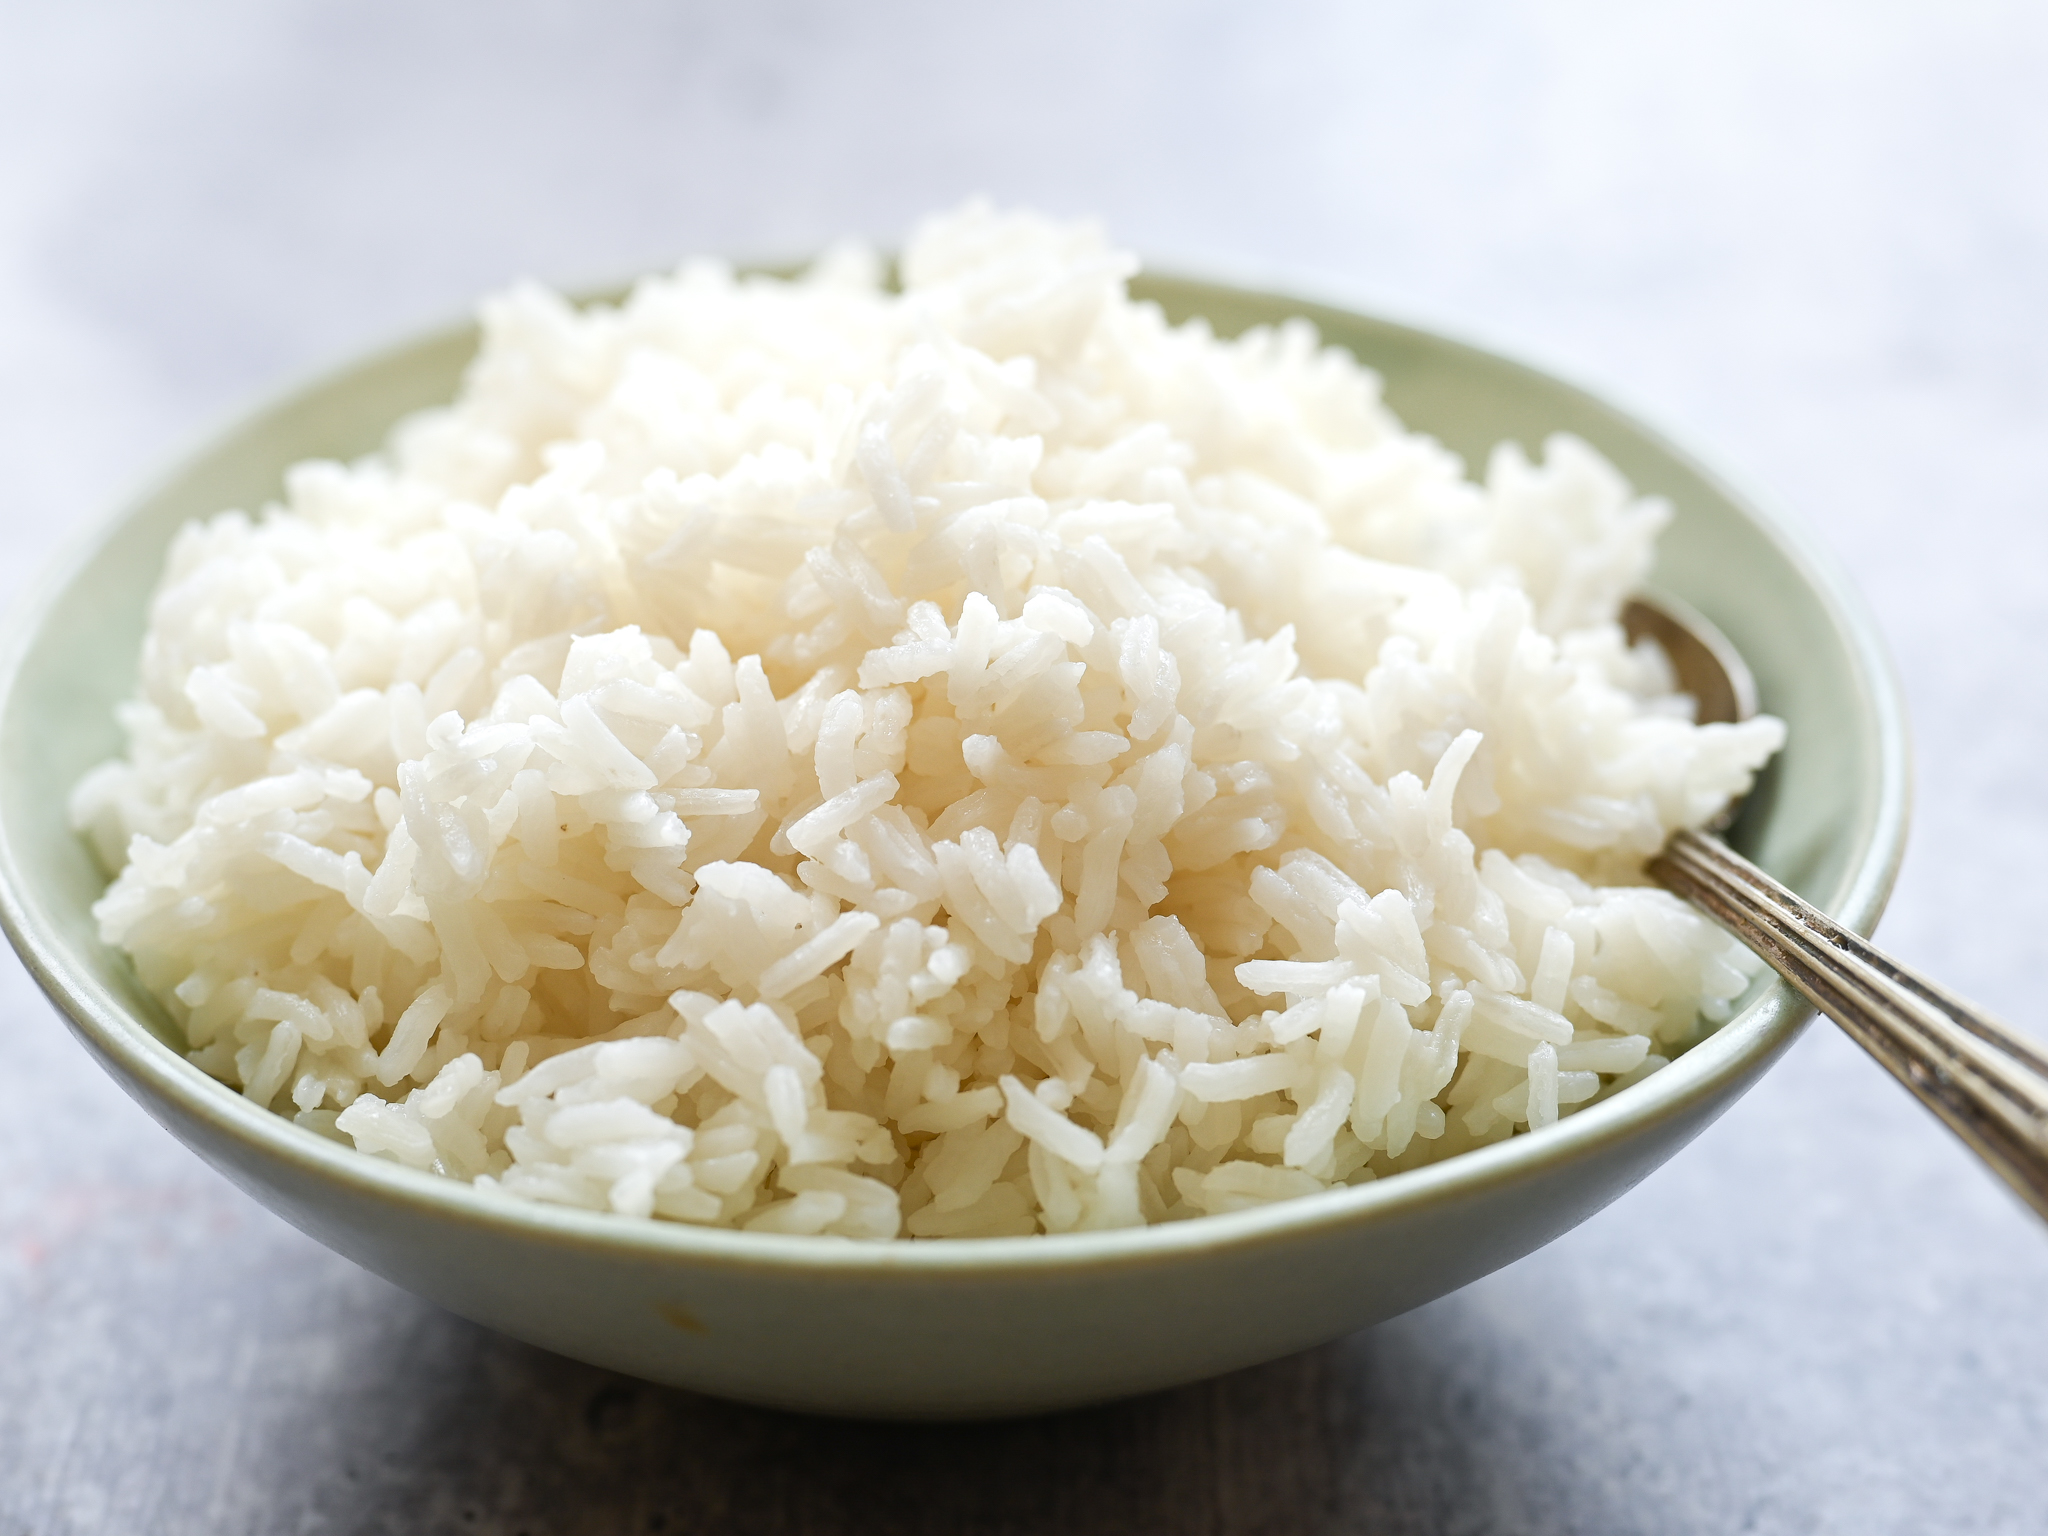 https://www.onceuponachef.com/images/2014/10/jasmine-rice-1.jpg